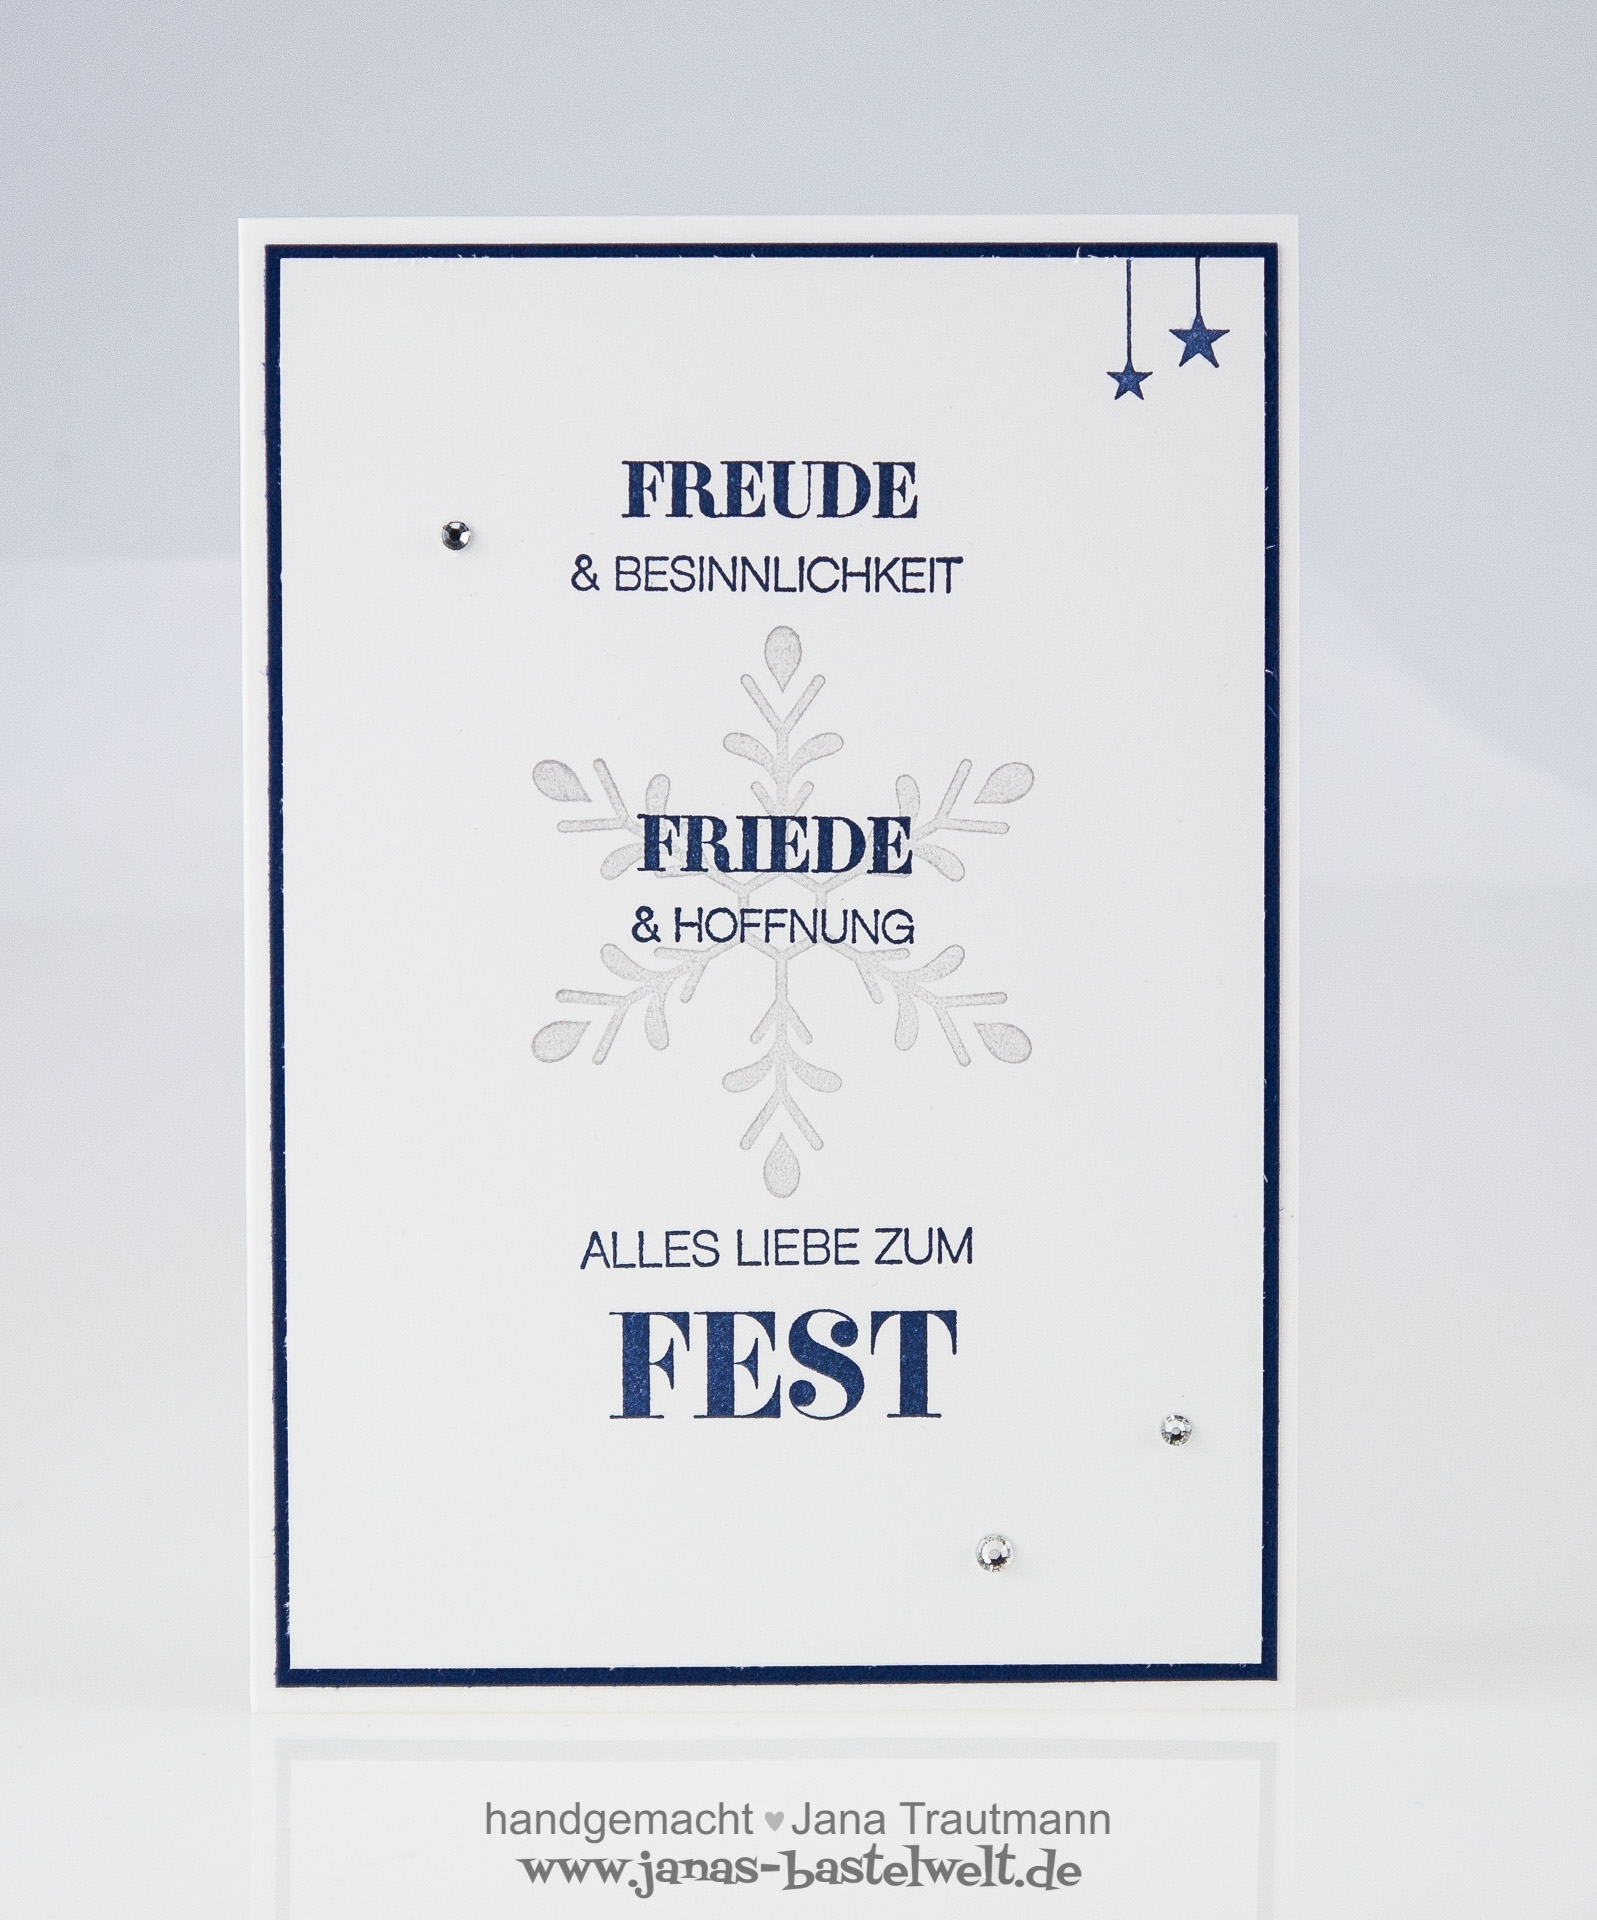 Freude Friede Fest 1 2016